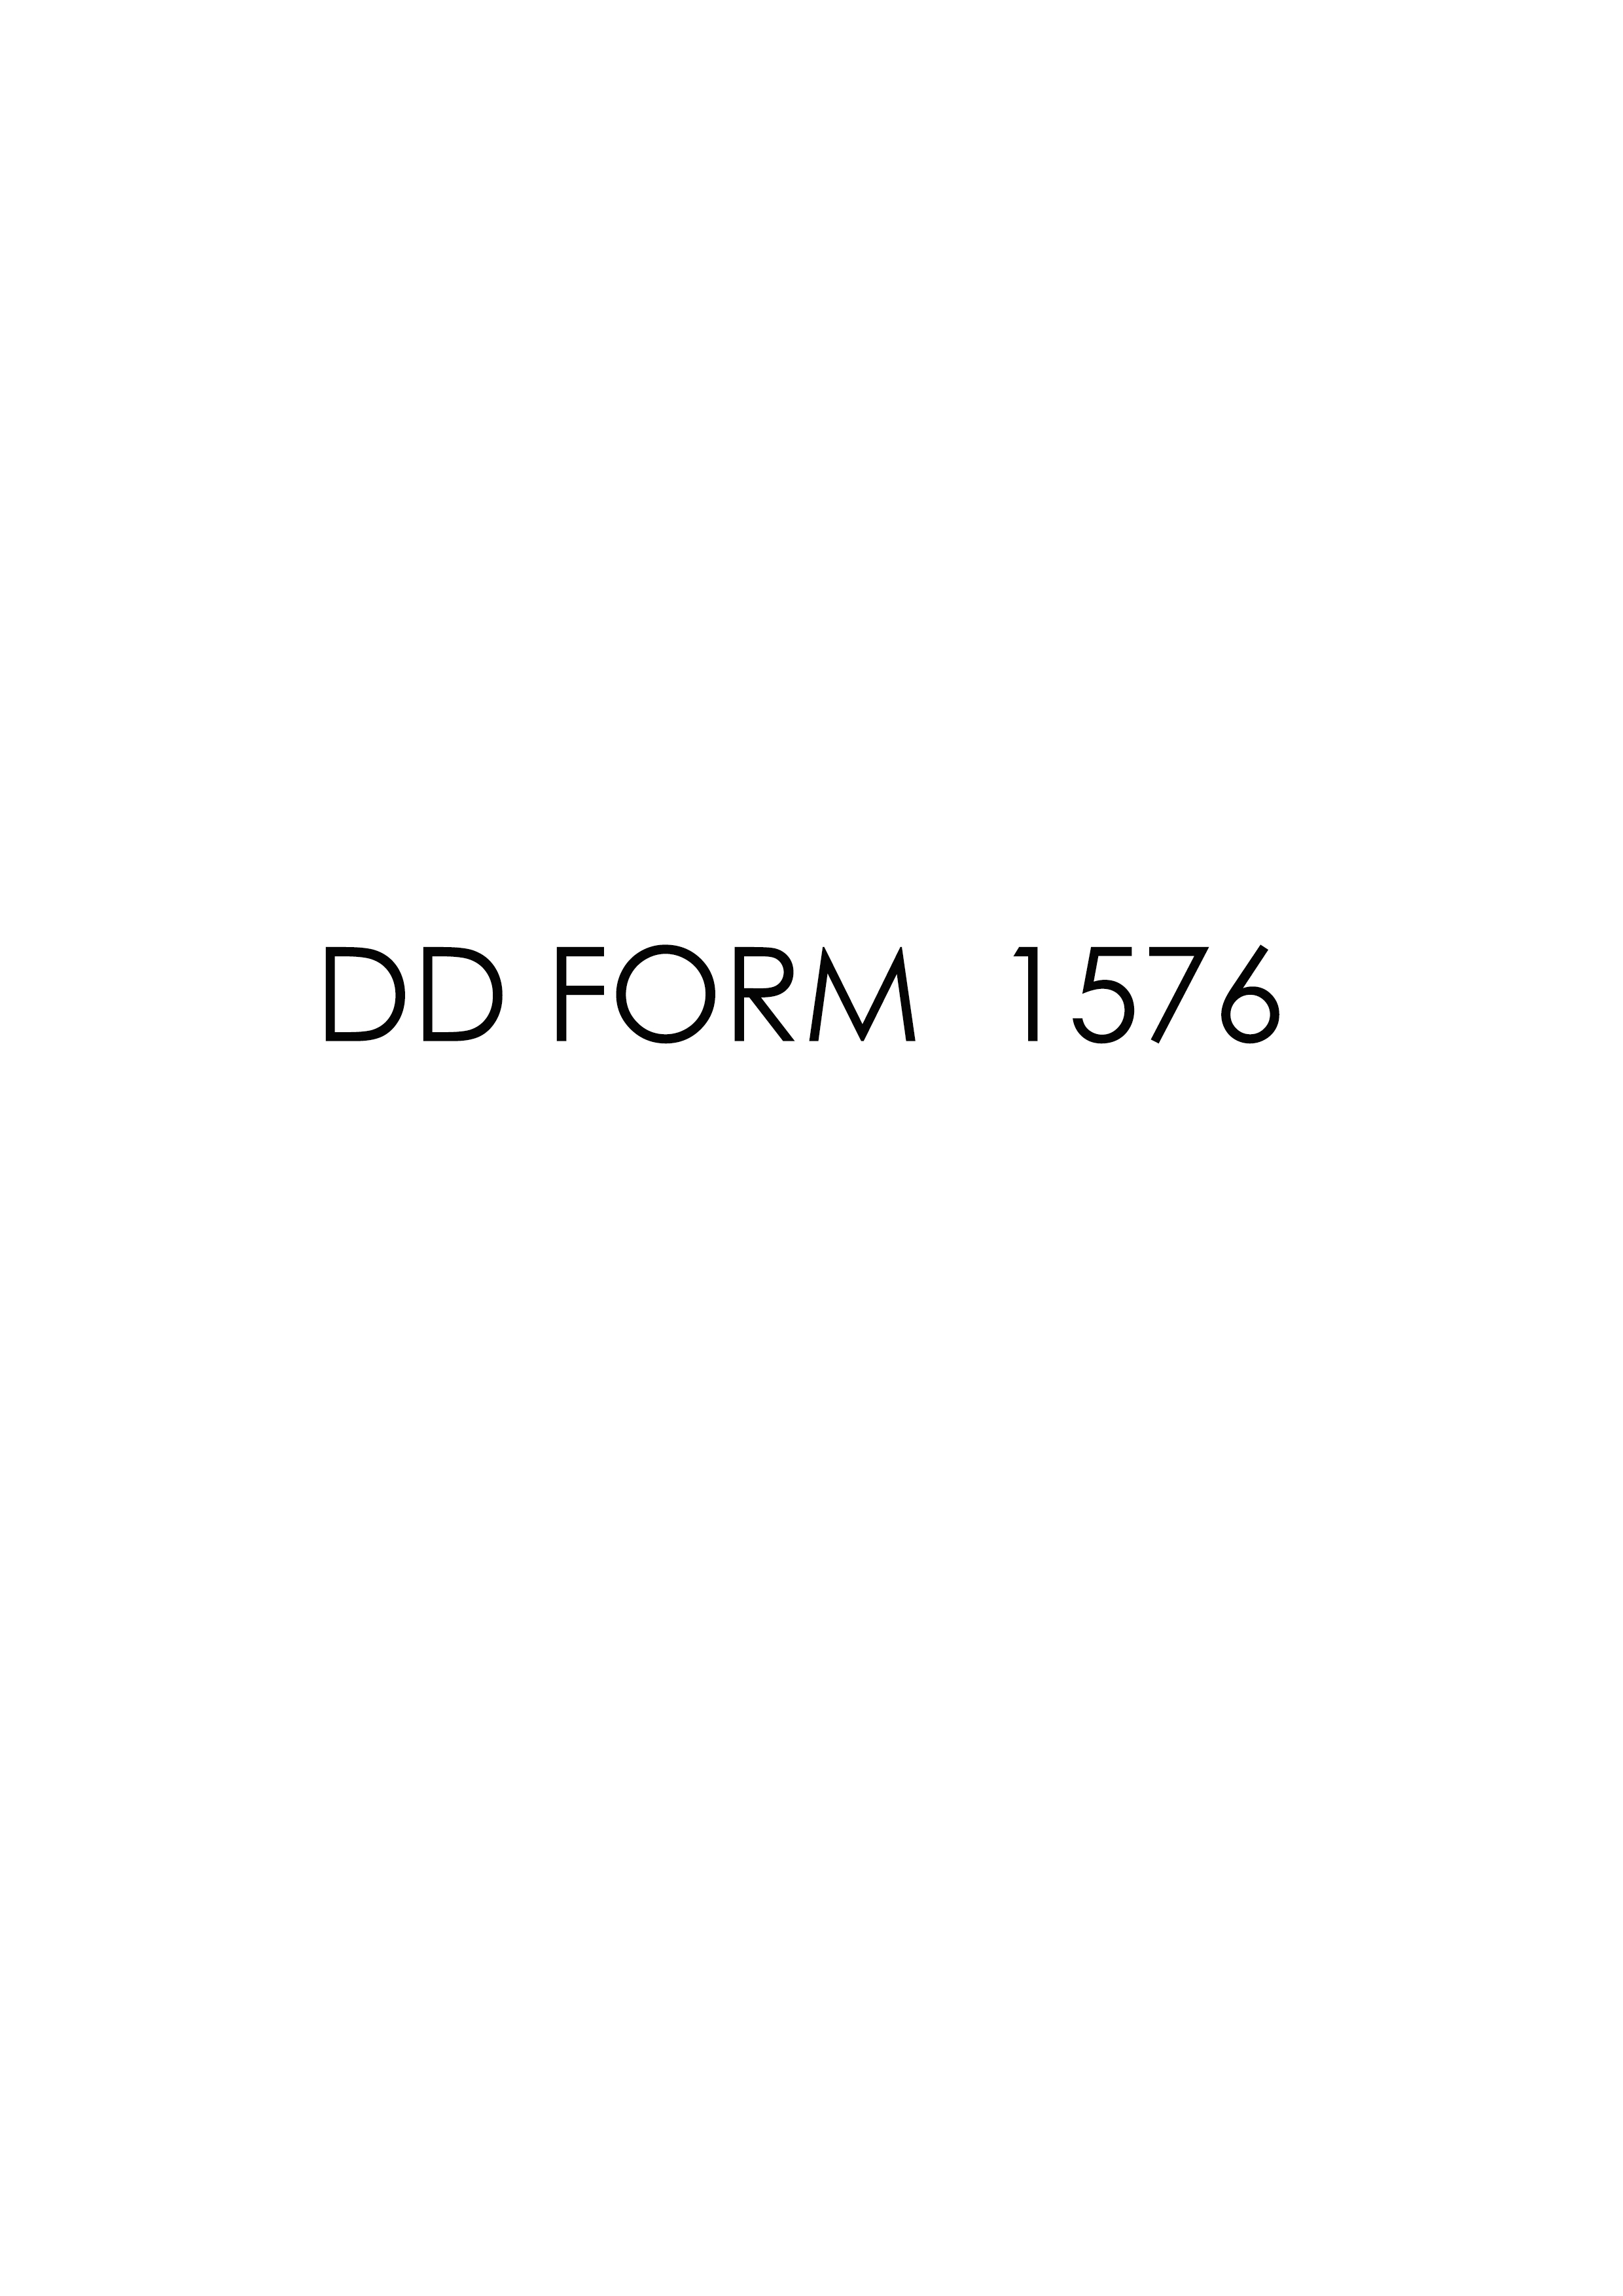 Download dd form 1576